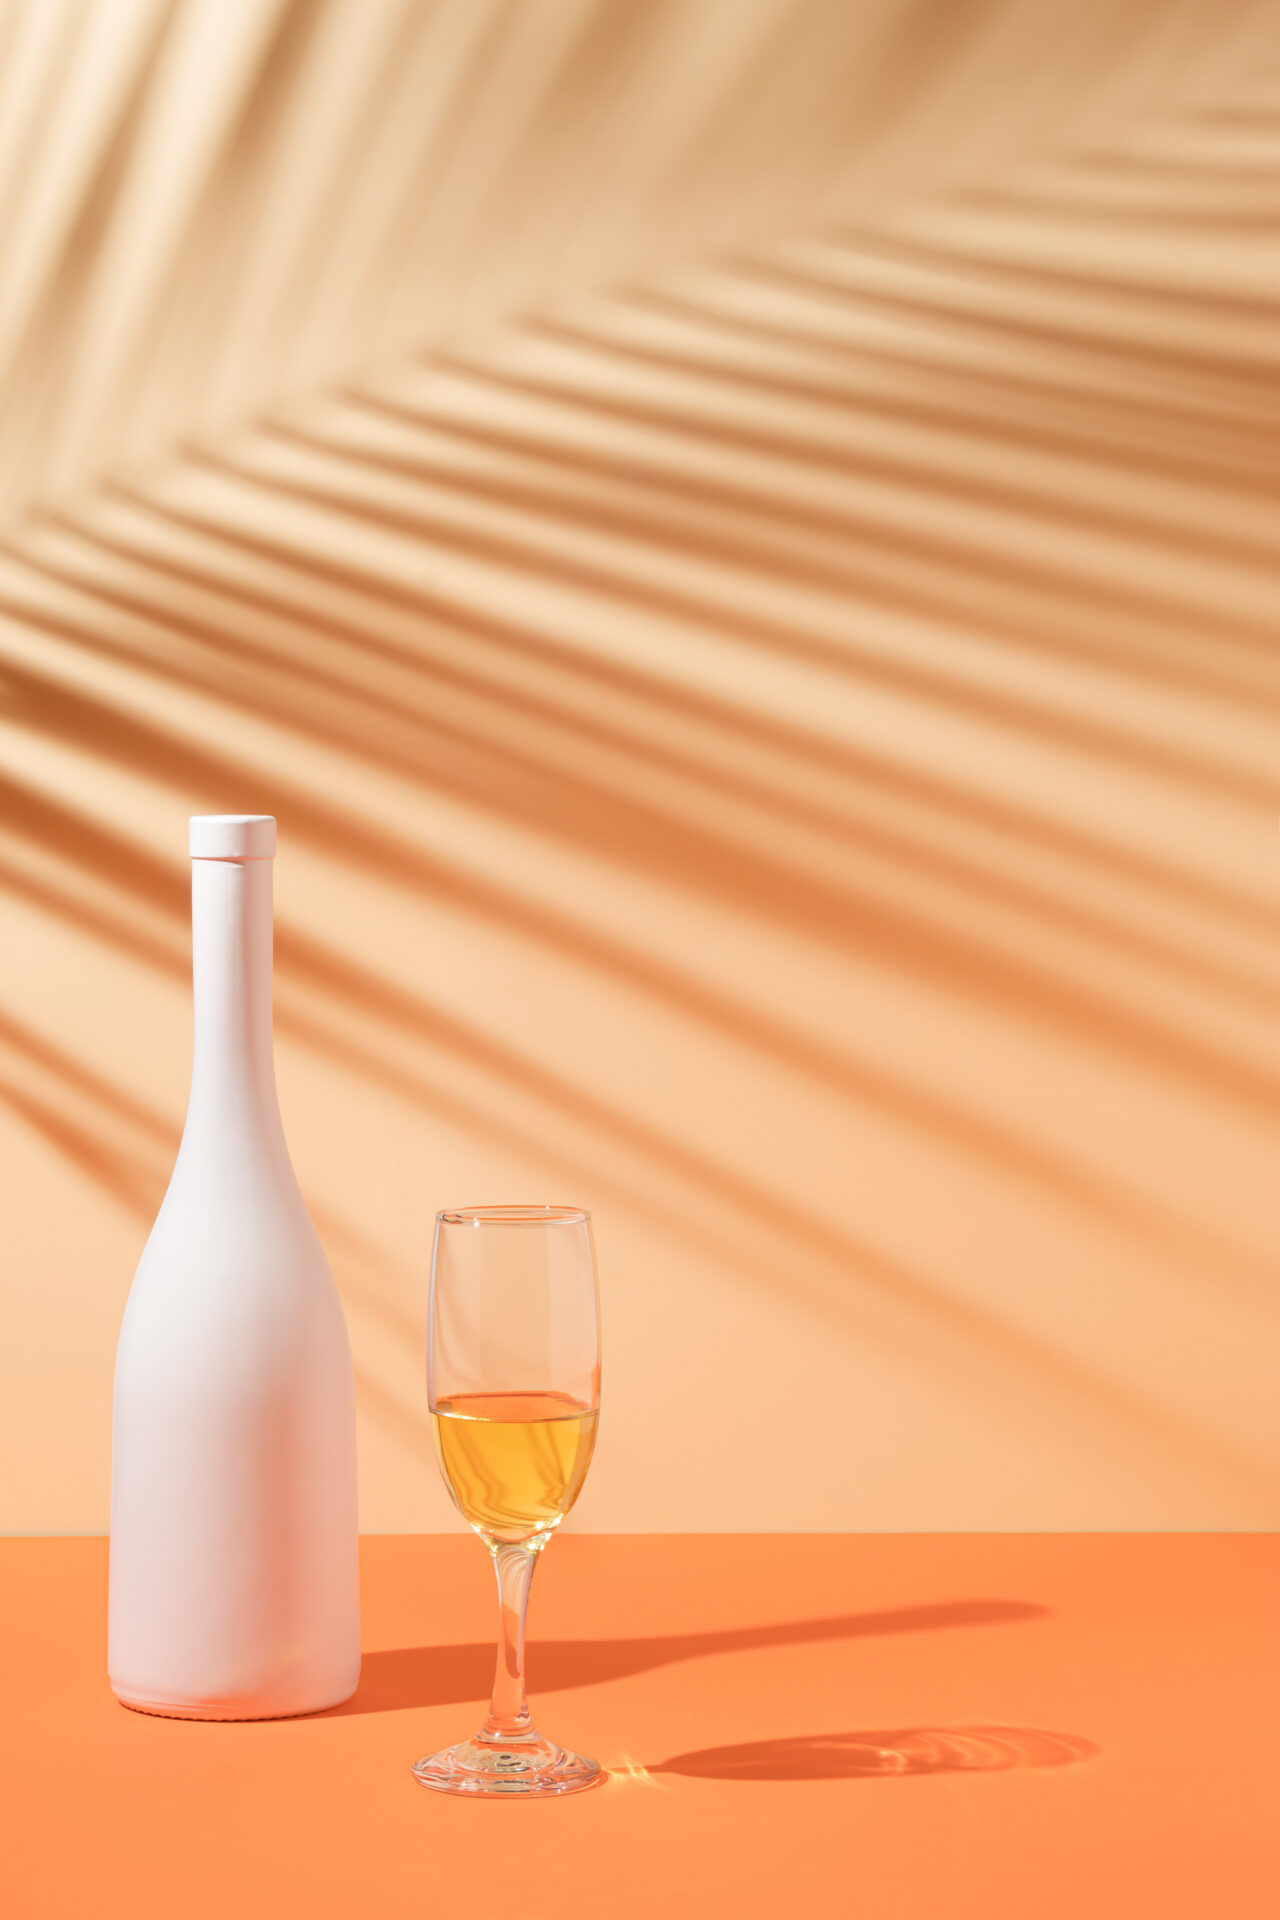 Explore the intriguing world of orange wine